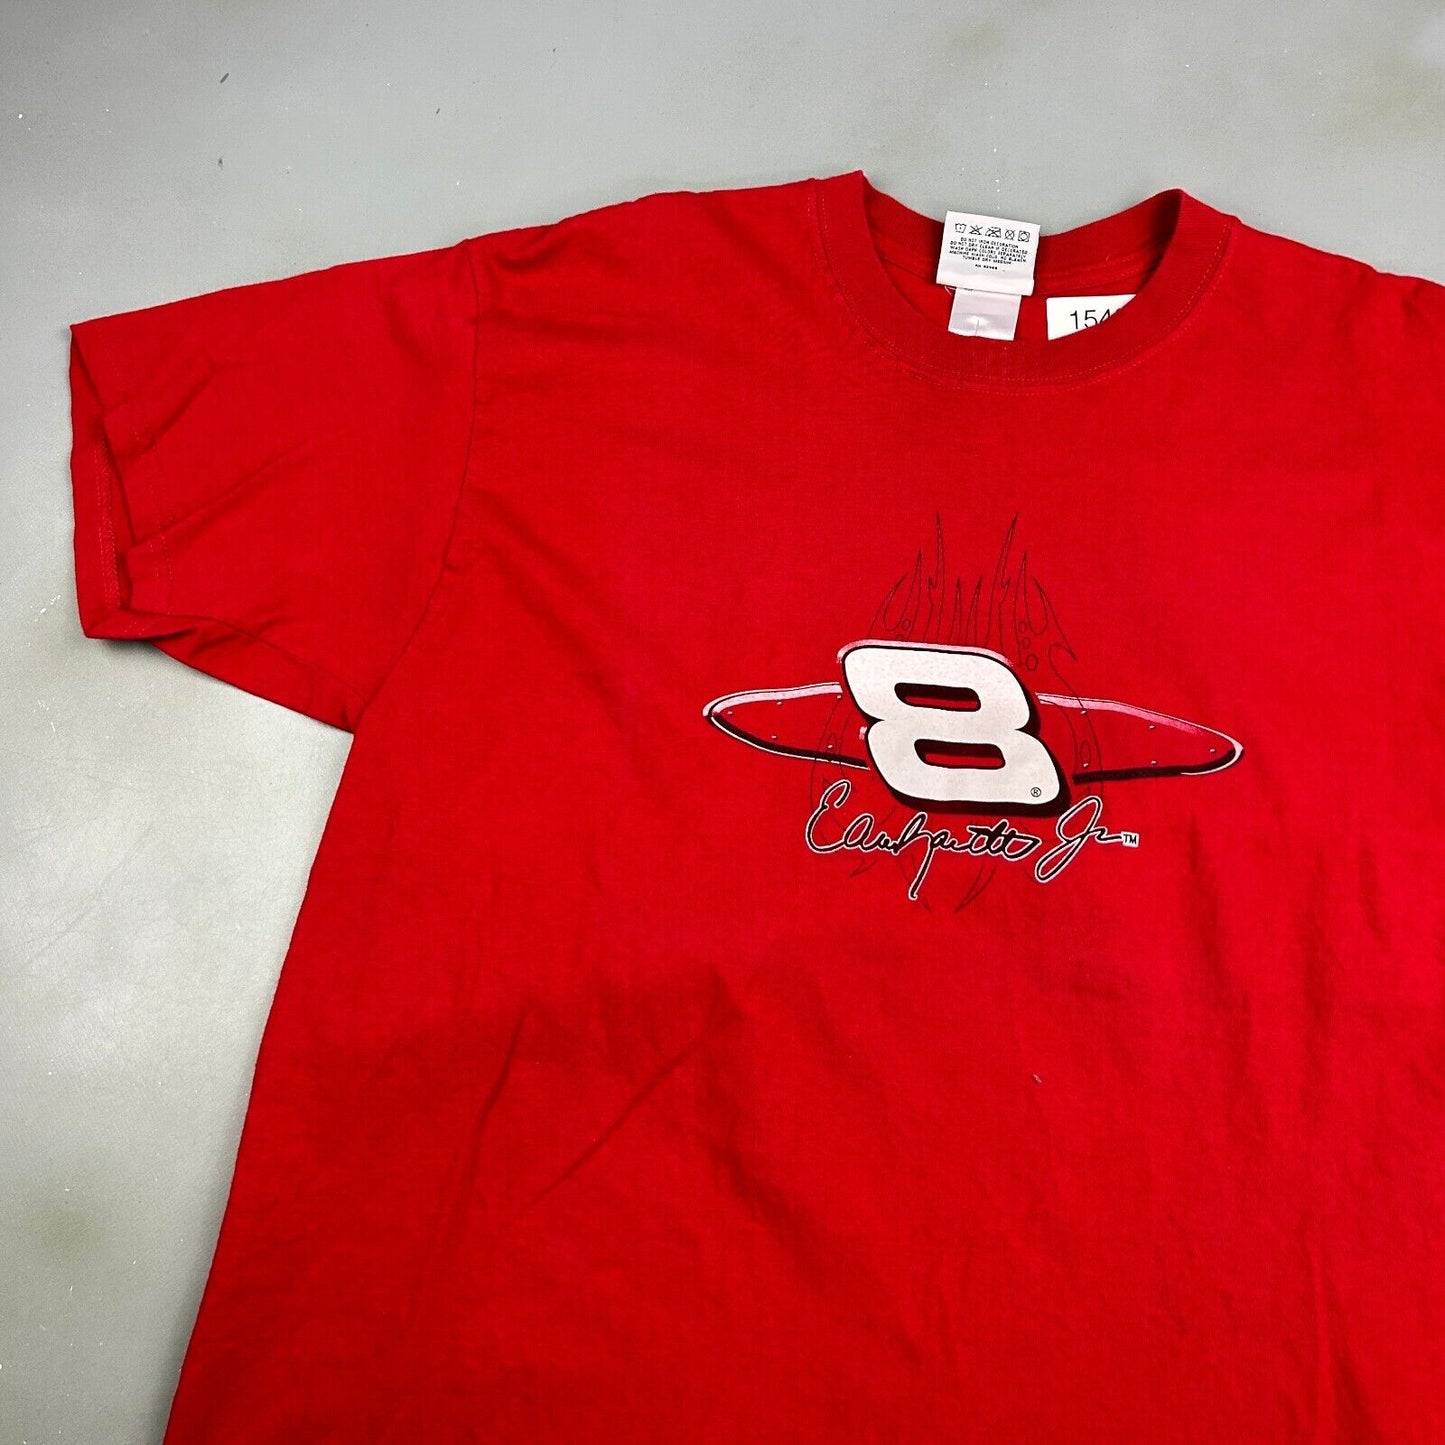 VINTAGE | BUDWEISER Racing Earnhardt Jr. Nascar T-Shirt sz L Men Adult